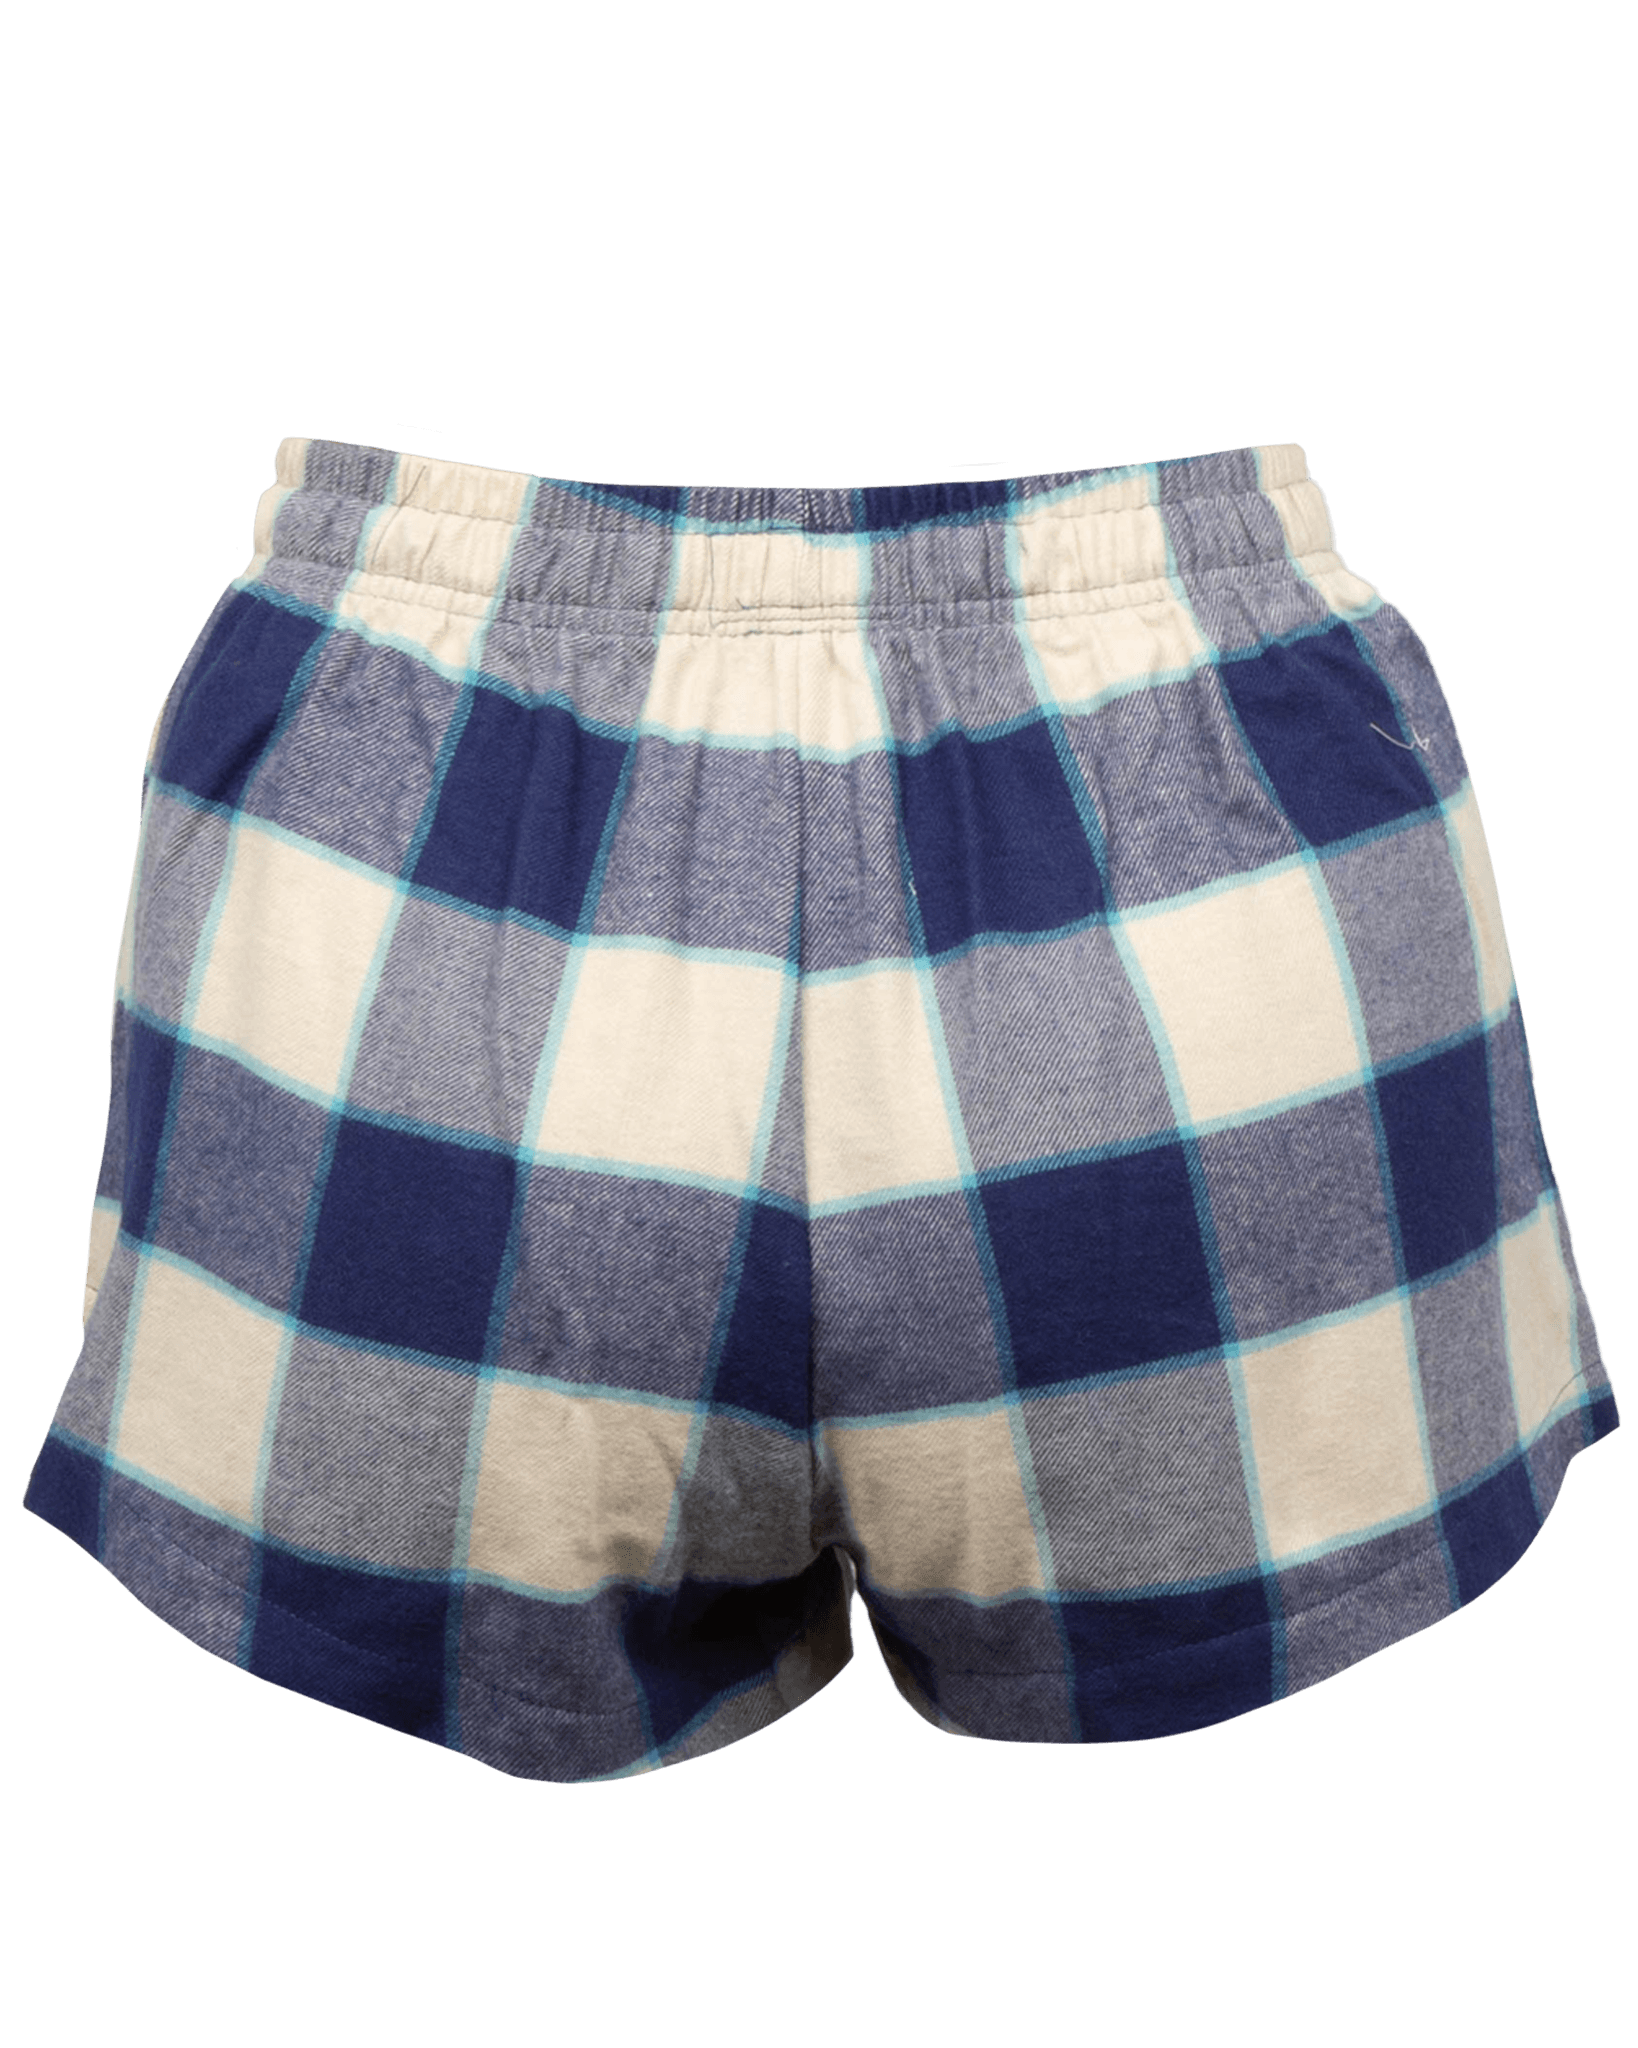 Men's Underwear for sale in Salsbury Cove, Maine